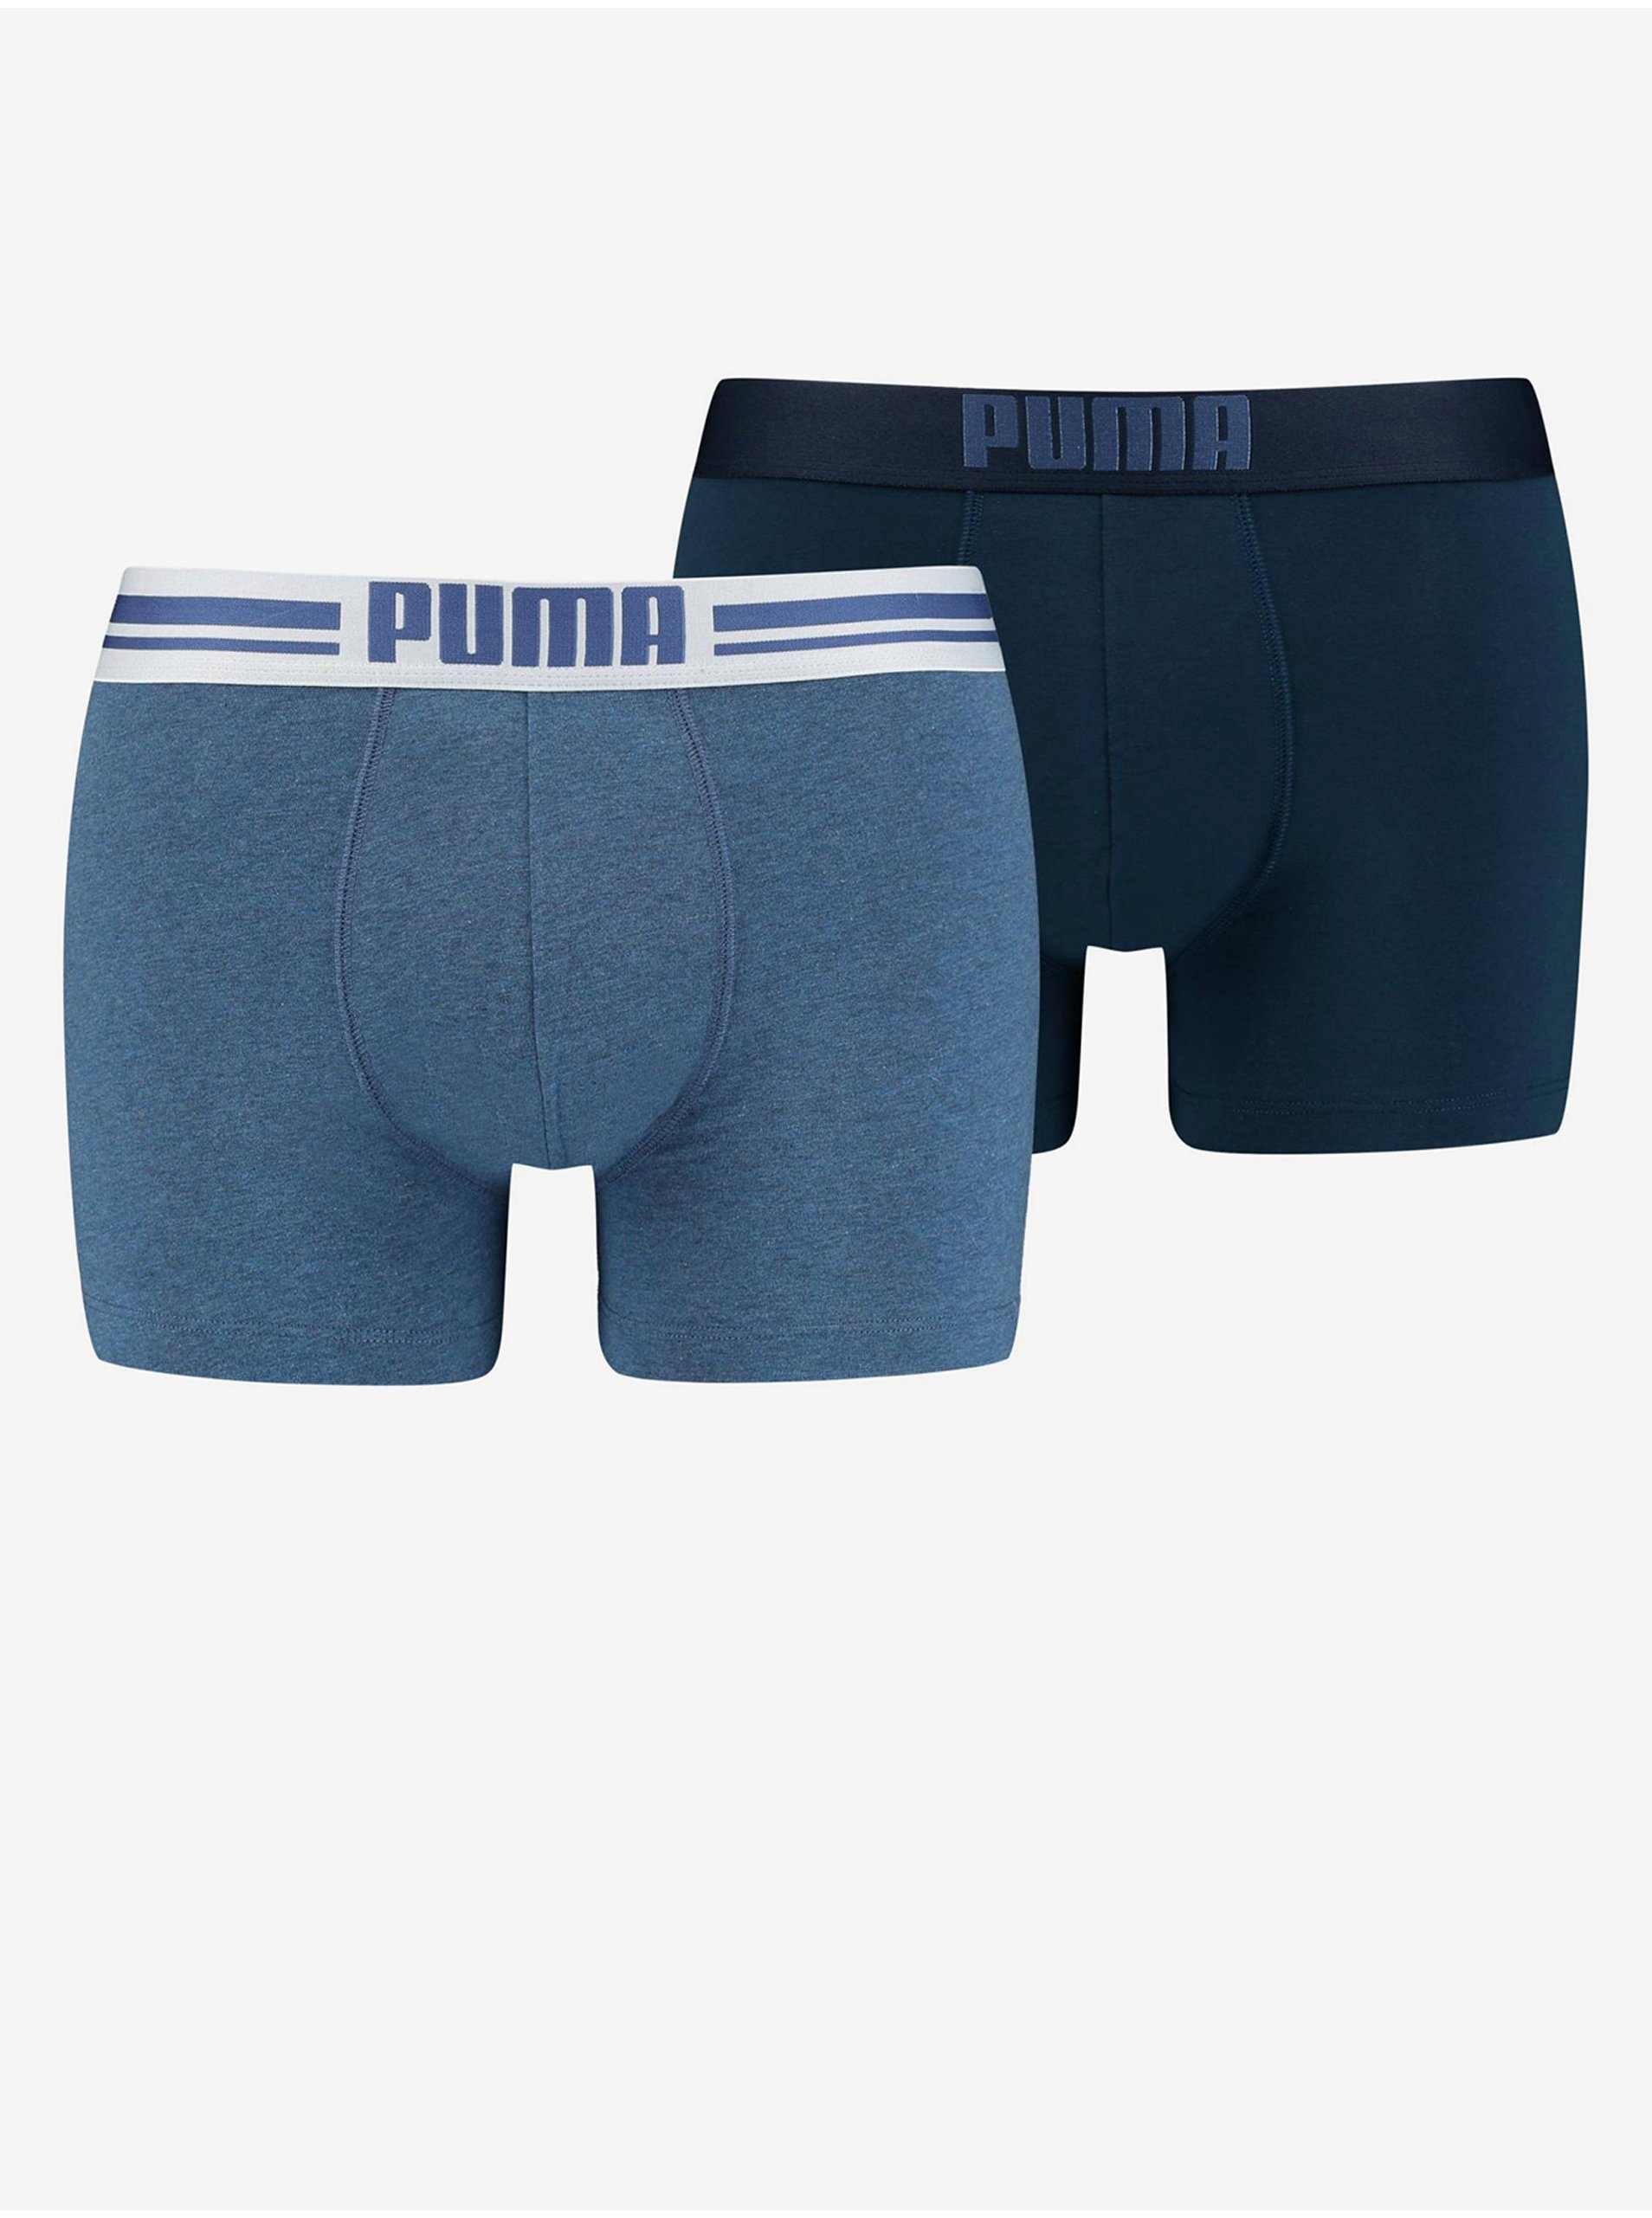 E-shop Sada dvou pánských boxerek v tmavě modré a modré barvě Puma